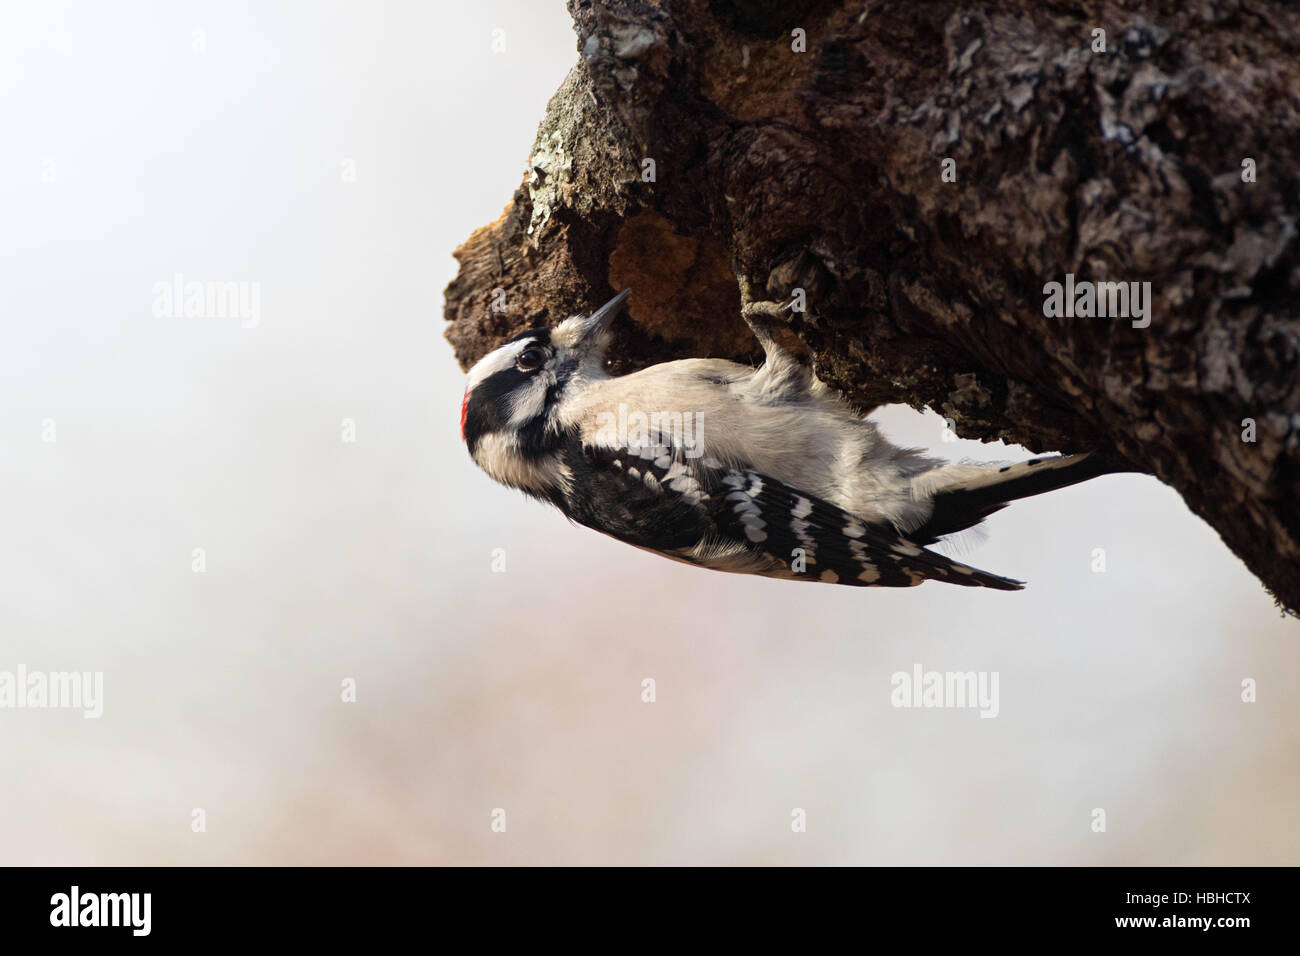 Hairy Woodpecker Perched on trunk of an oak tree Stock Photo